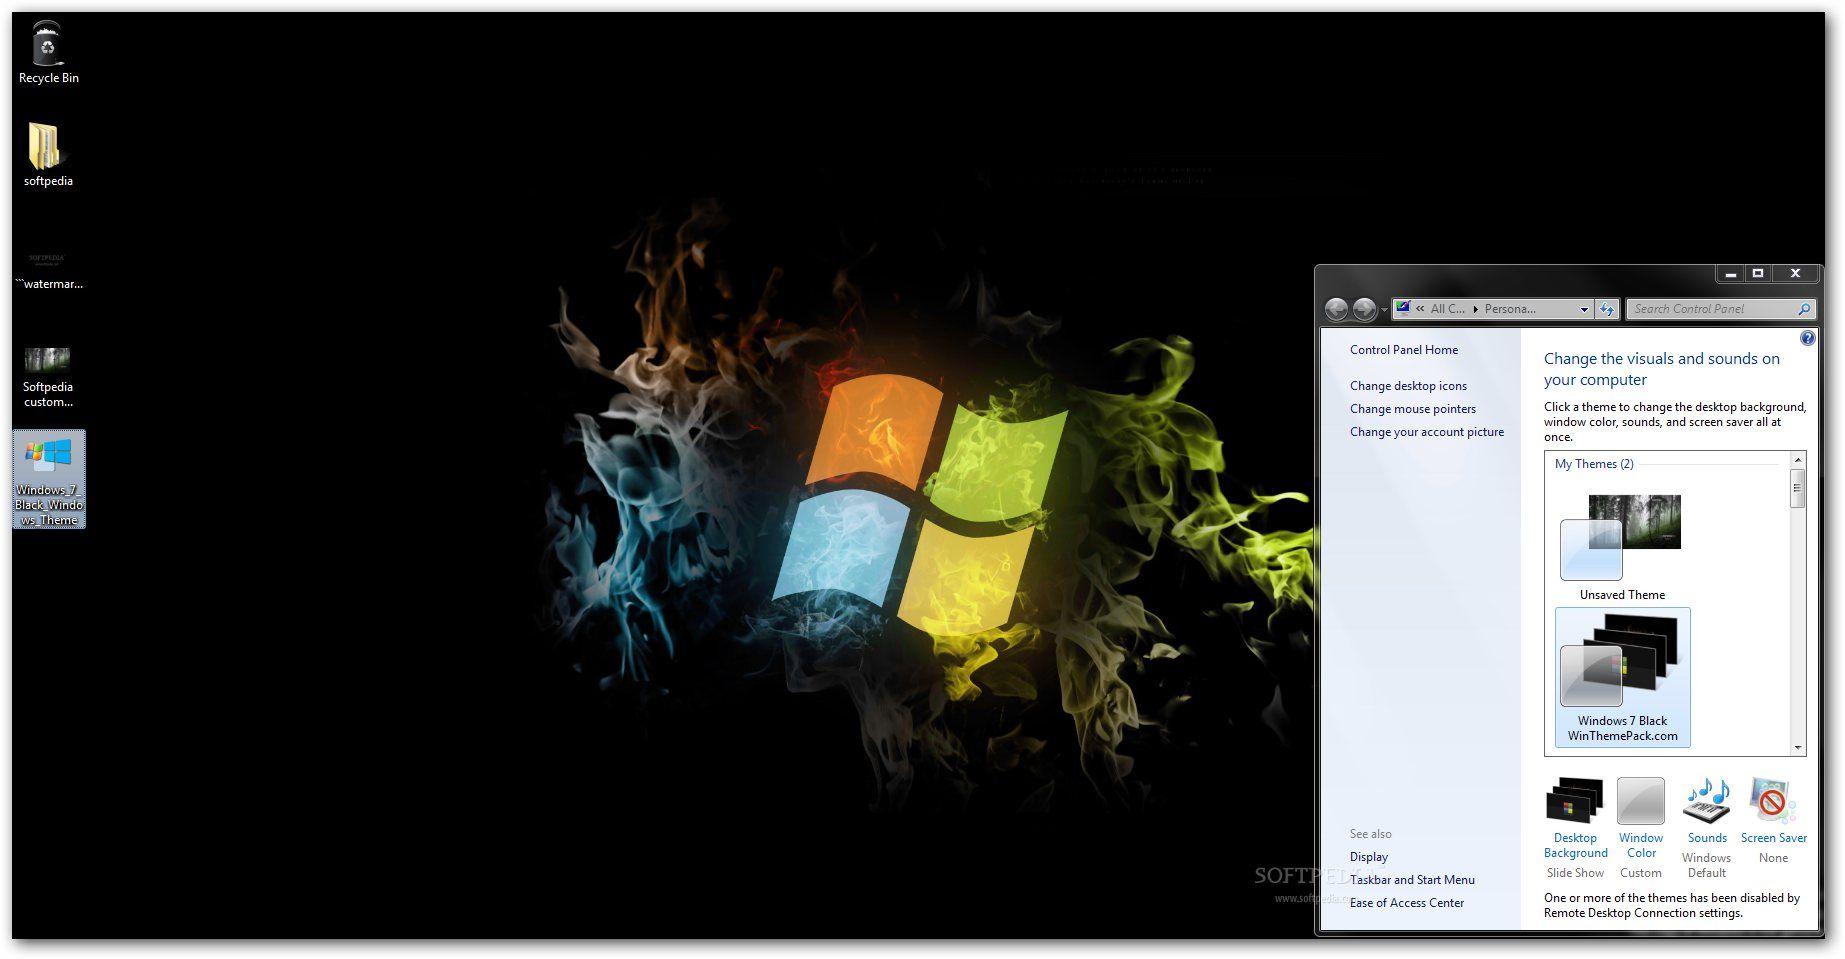 Black Windows 1.0 Logo - Download Windows 7 Black Windows Theme 1.0